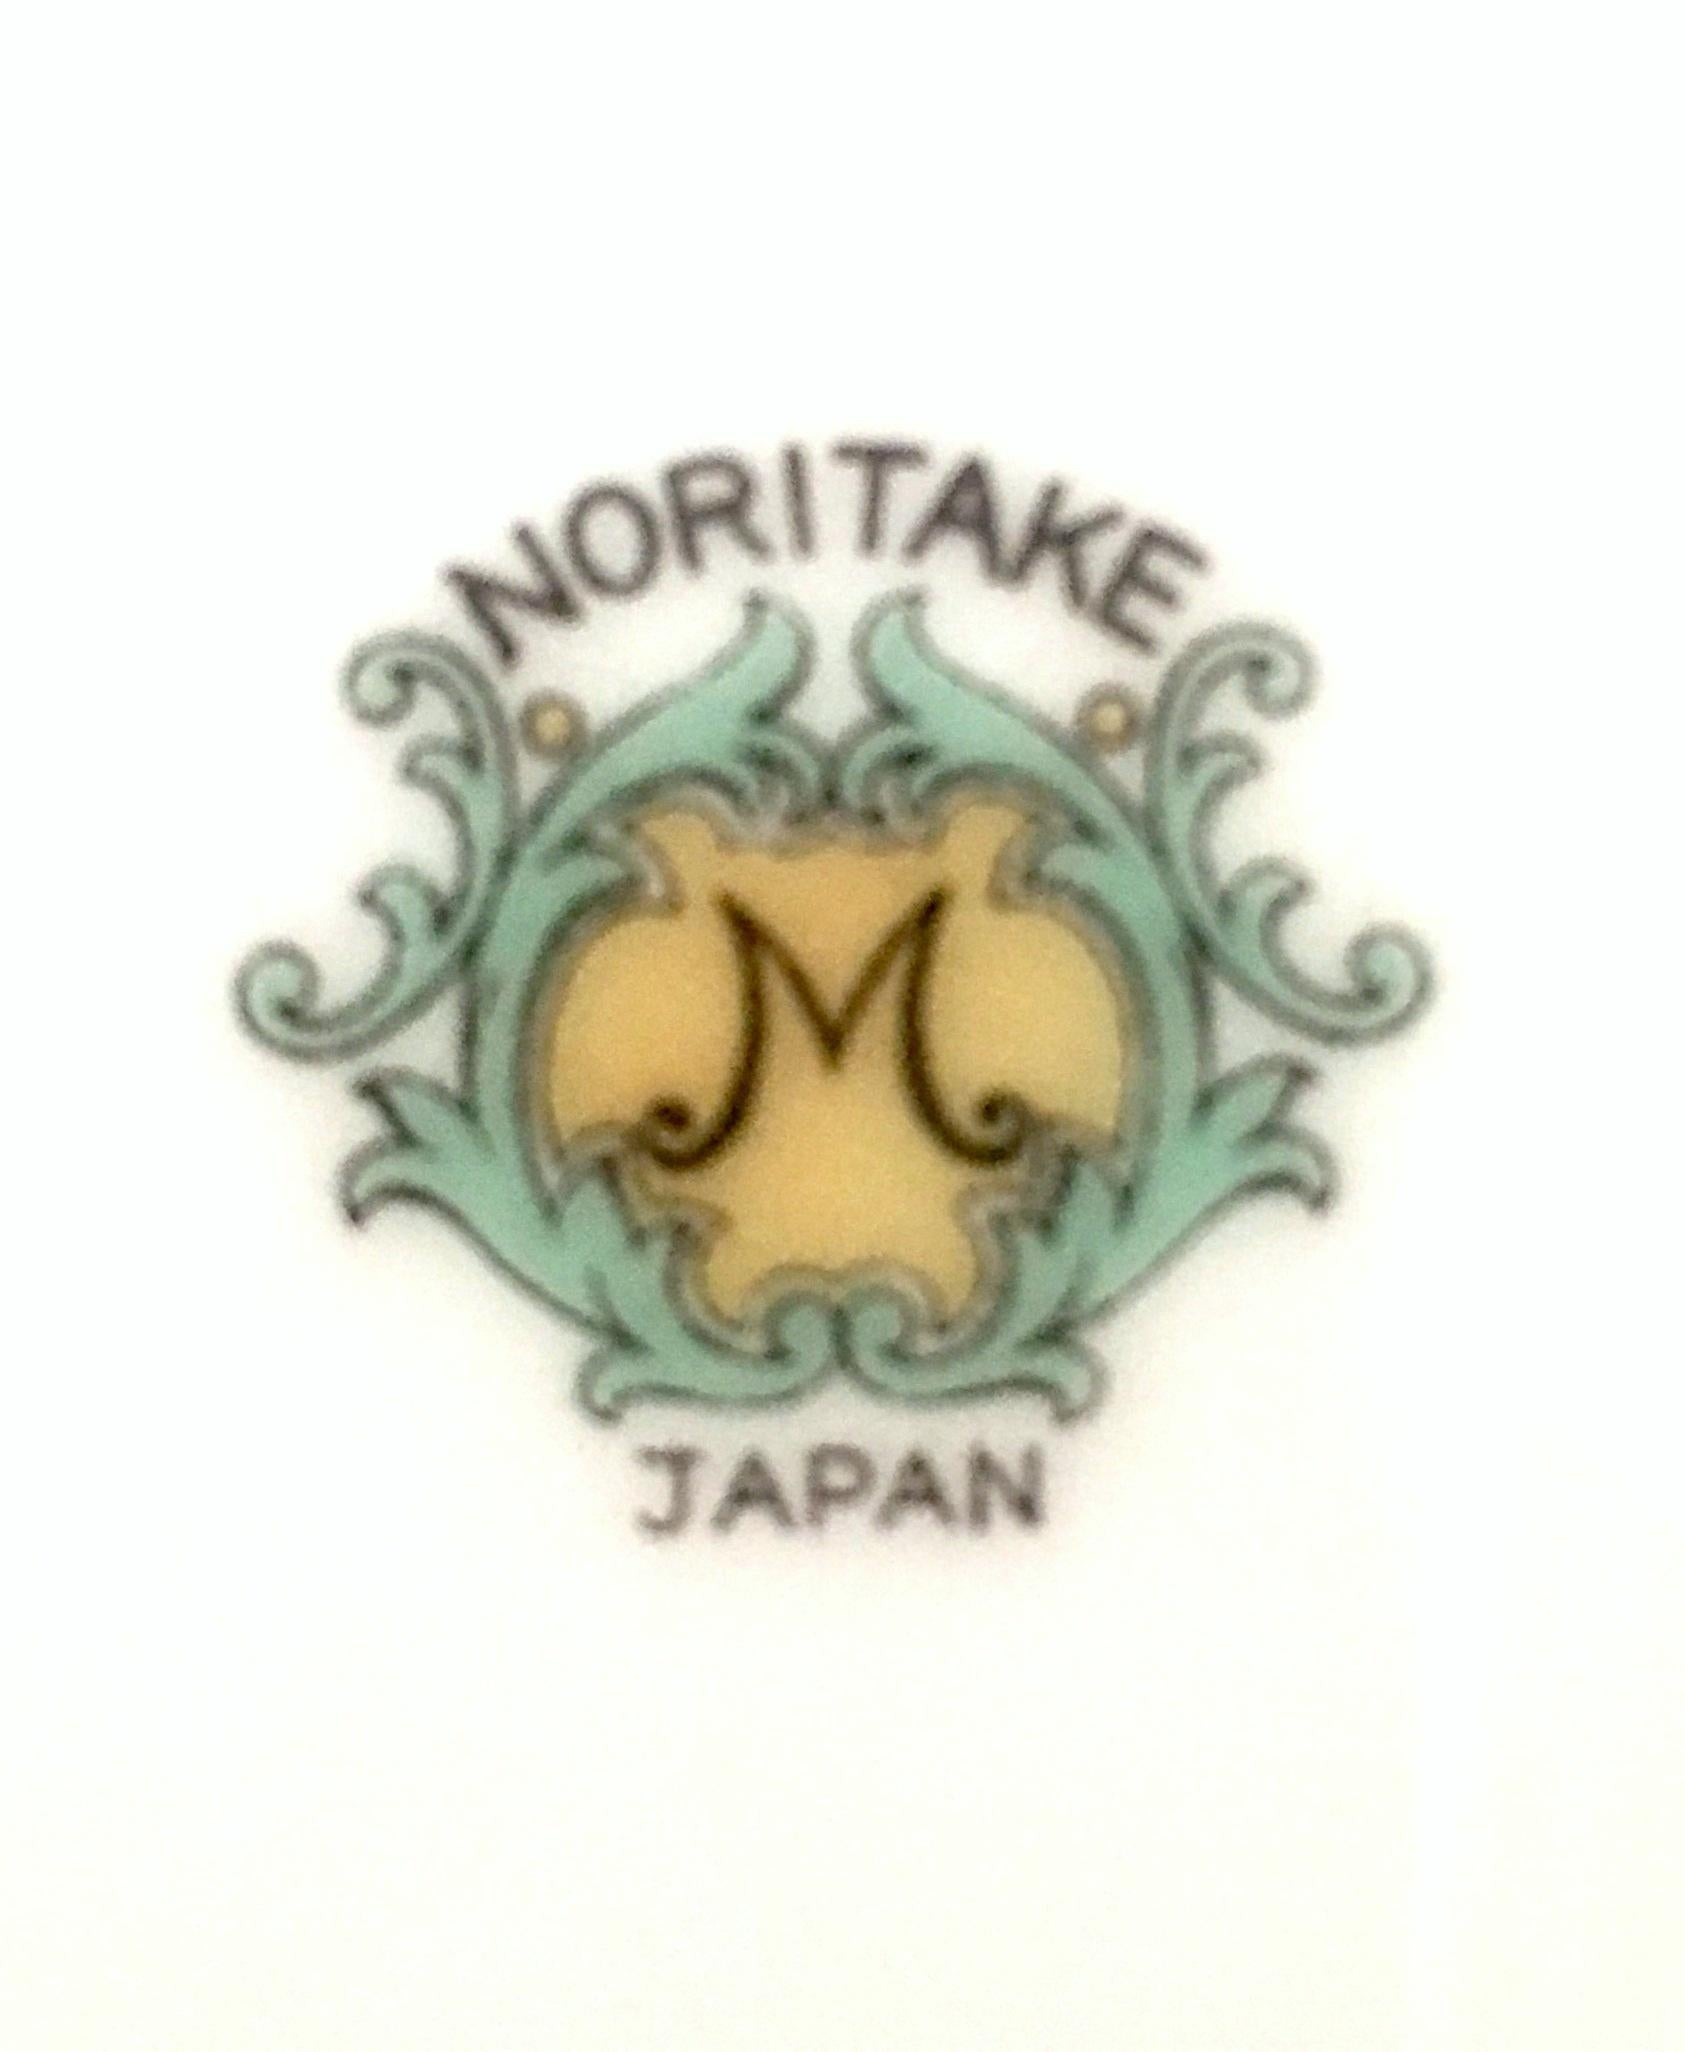 Noritake M Japan Salad Dessert Plates Wide Blue Border 7.75 Hand Painted Set of 4